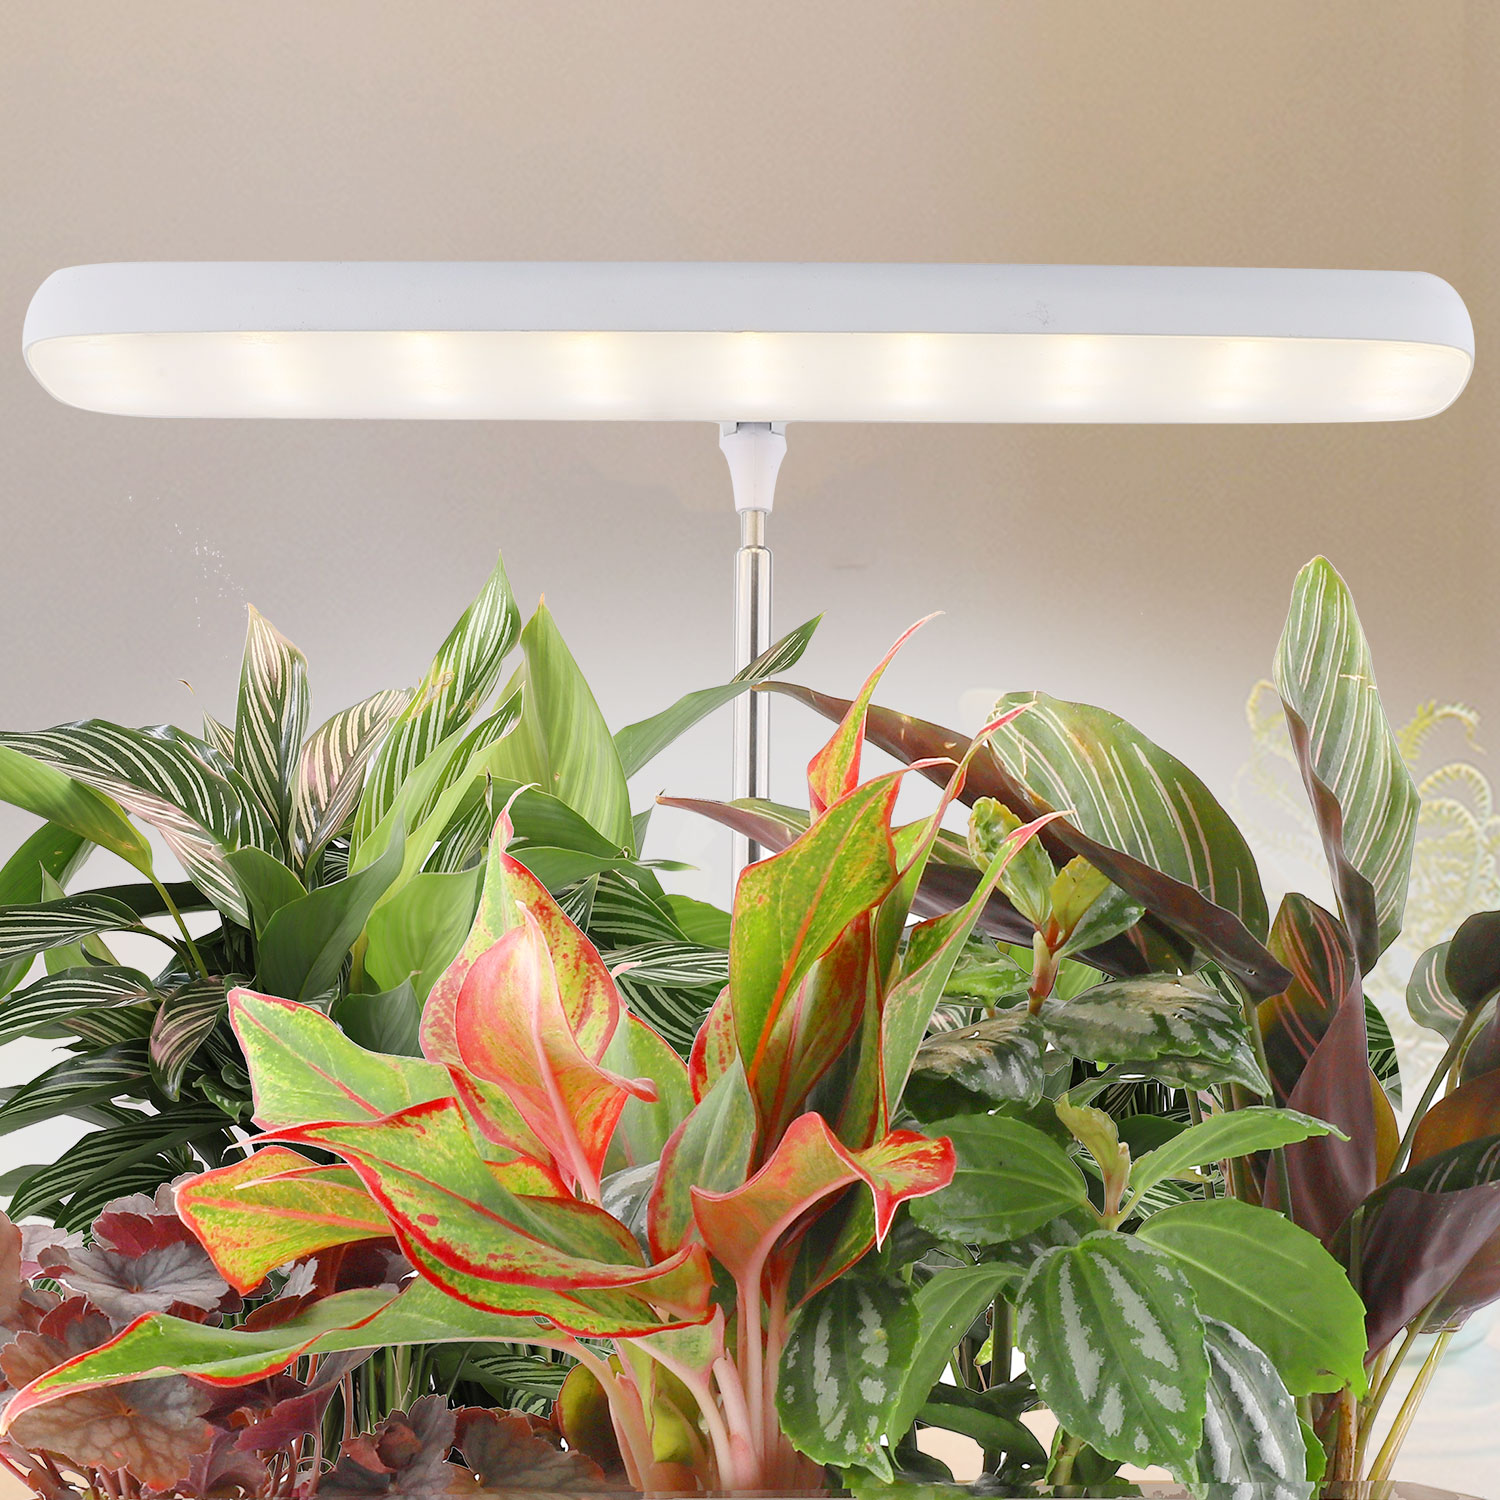 MG410 led house plant indoor plant lights դեկորատիվ աճող լամպի led մատակարար